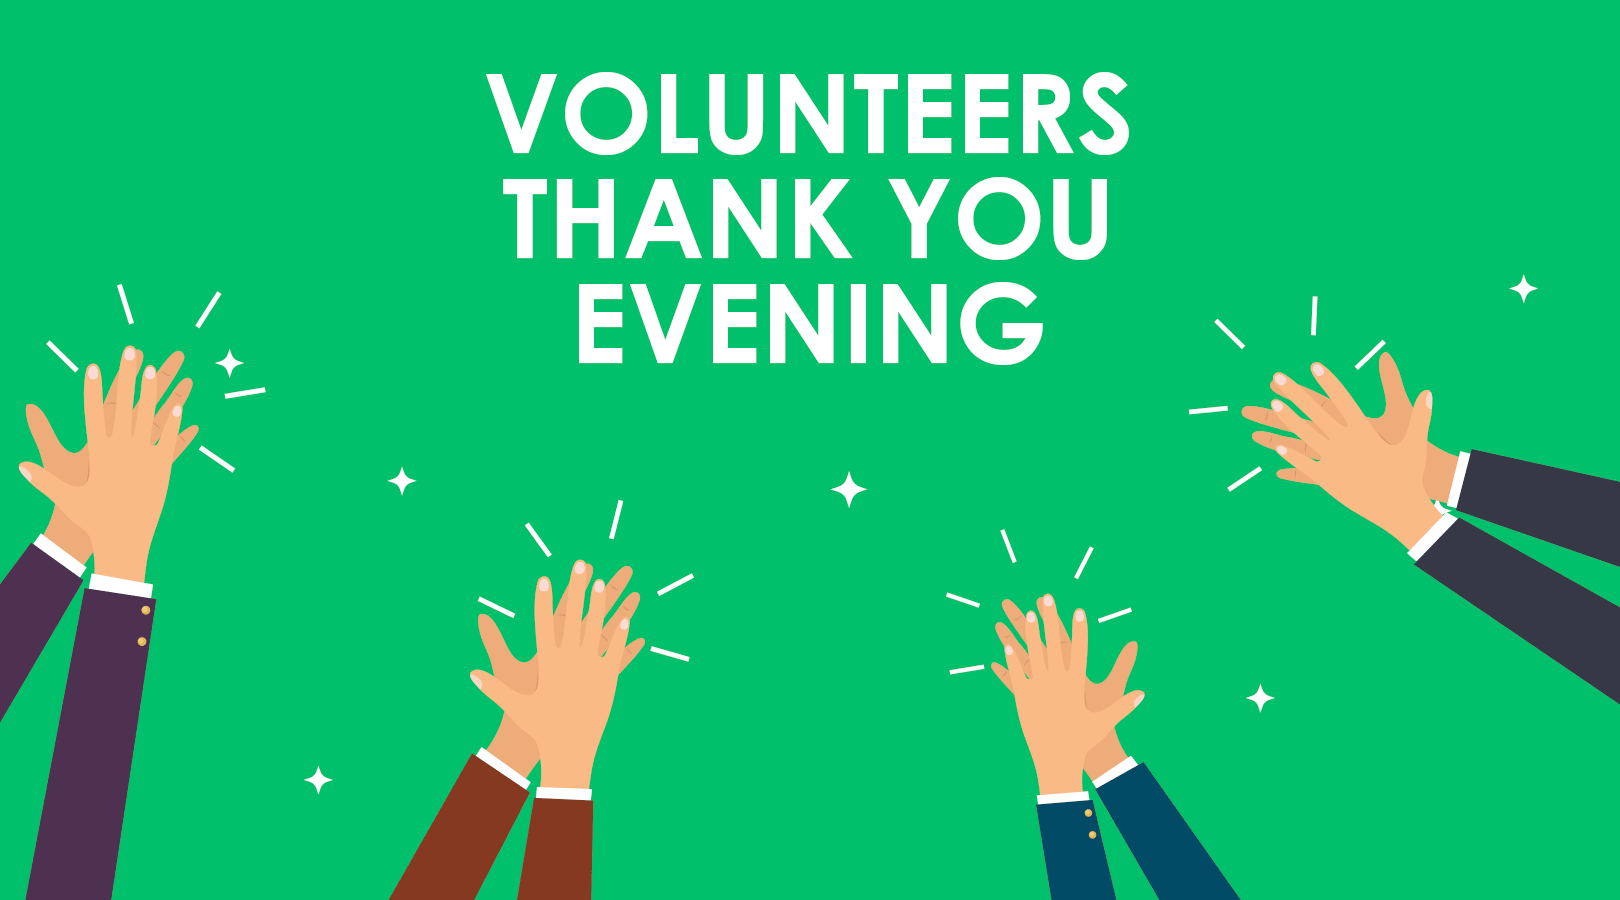 Volunteers’ Thank You Evening